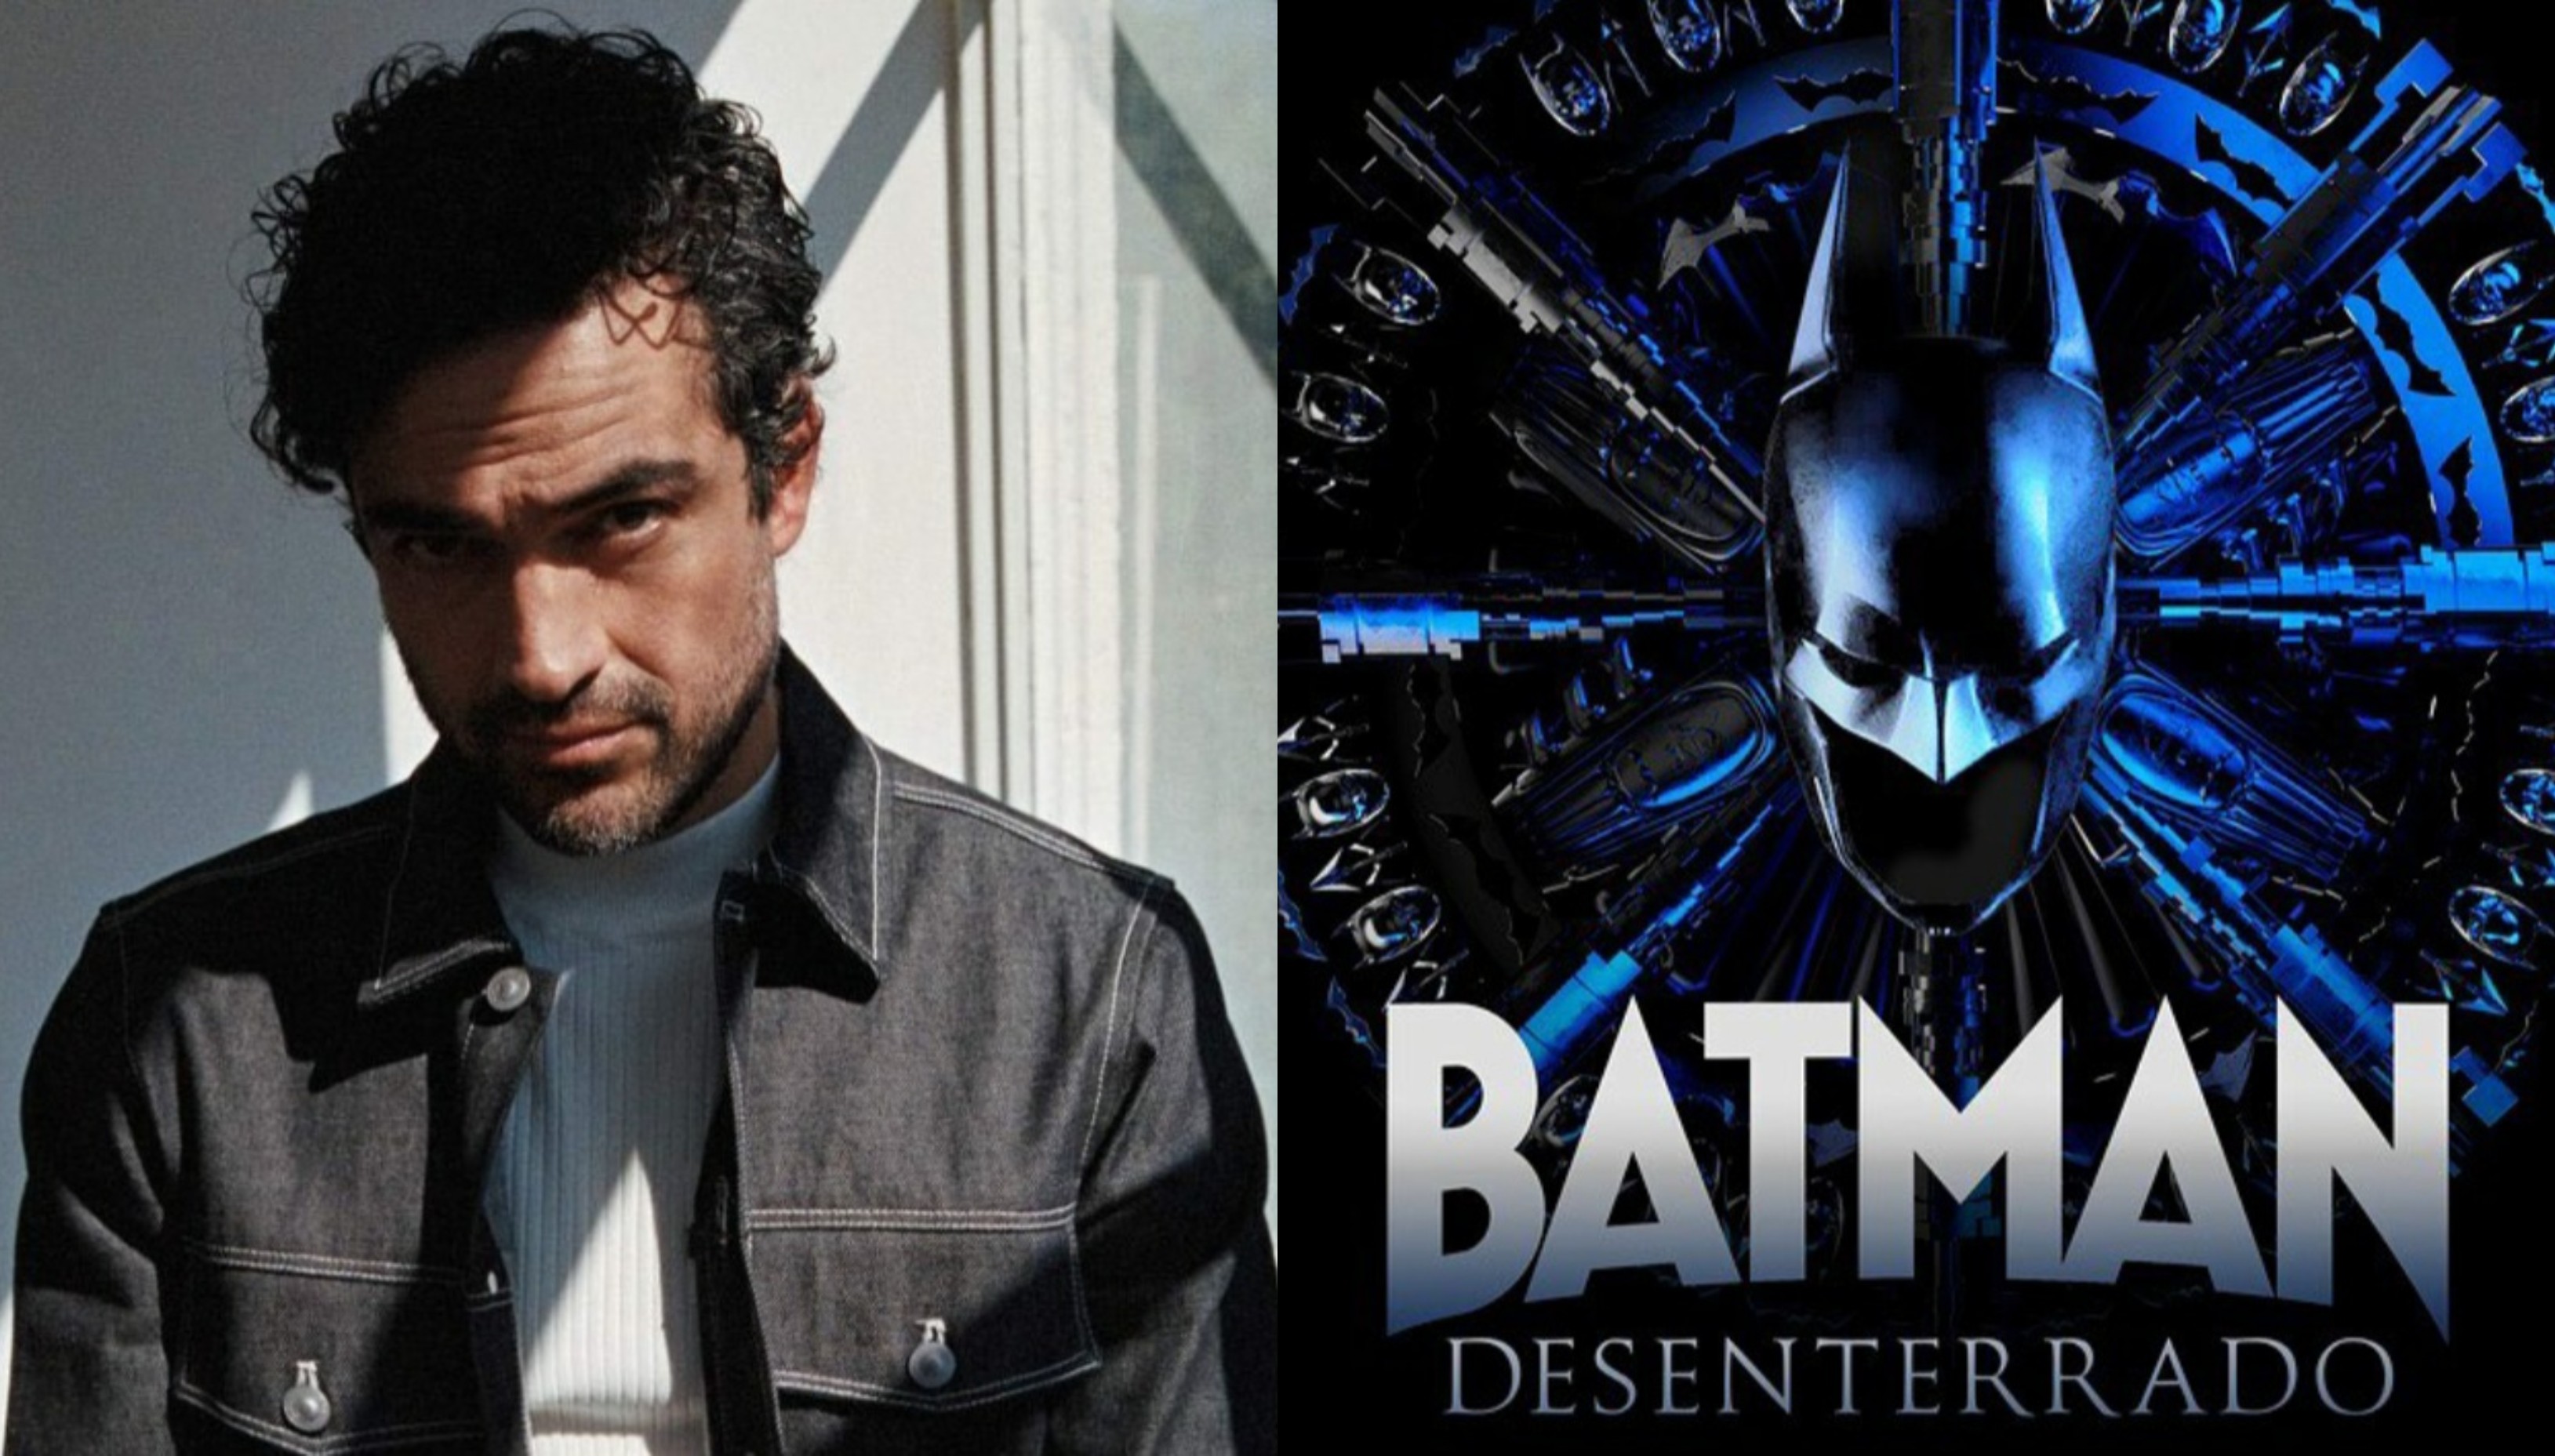 Alfonso Herrera will be the new Batman - Infobae